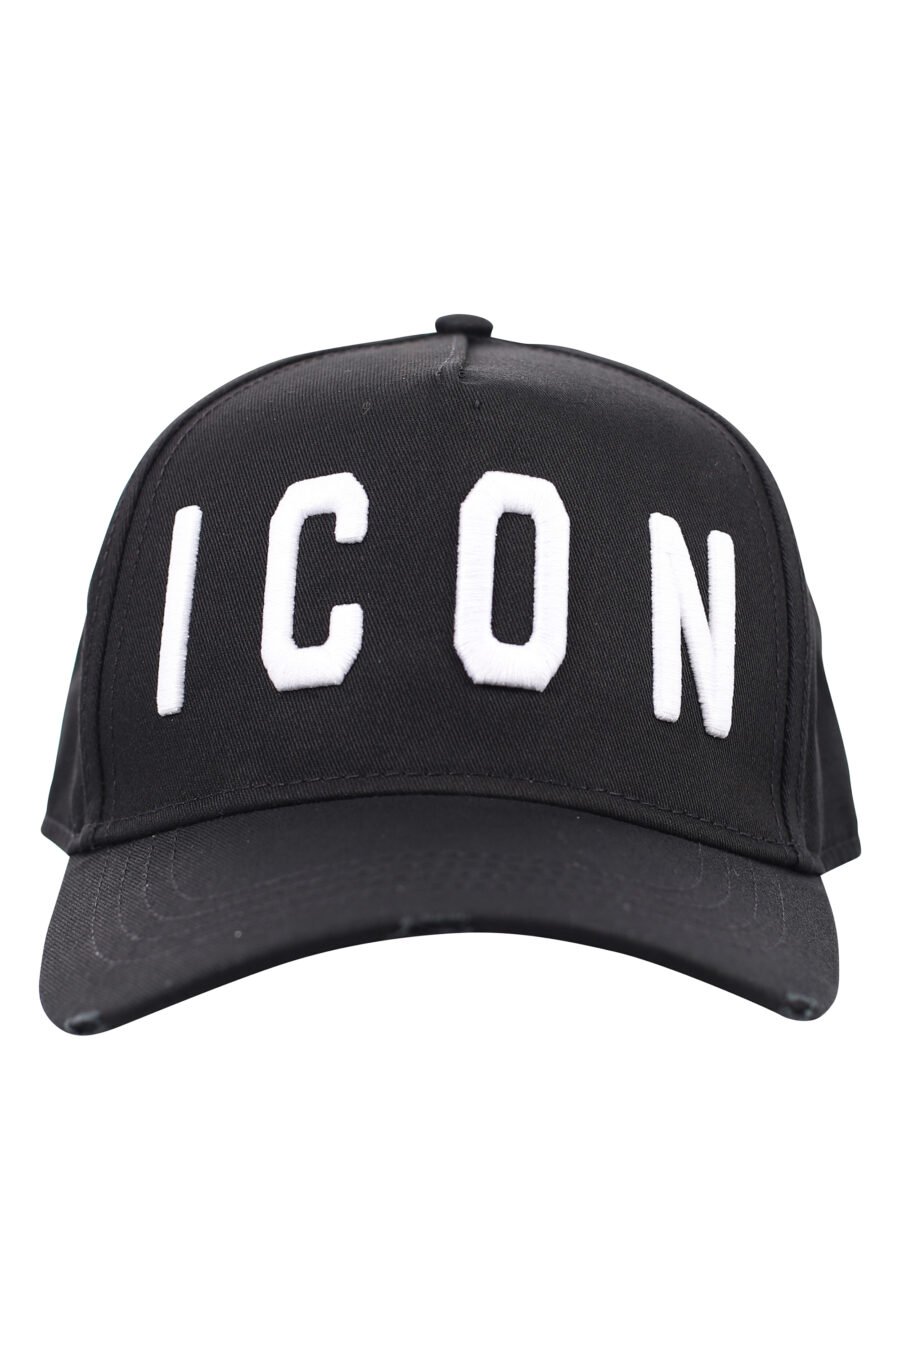 Gorra negra con logo "icon" blanco - IMG 1832